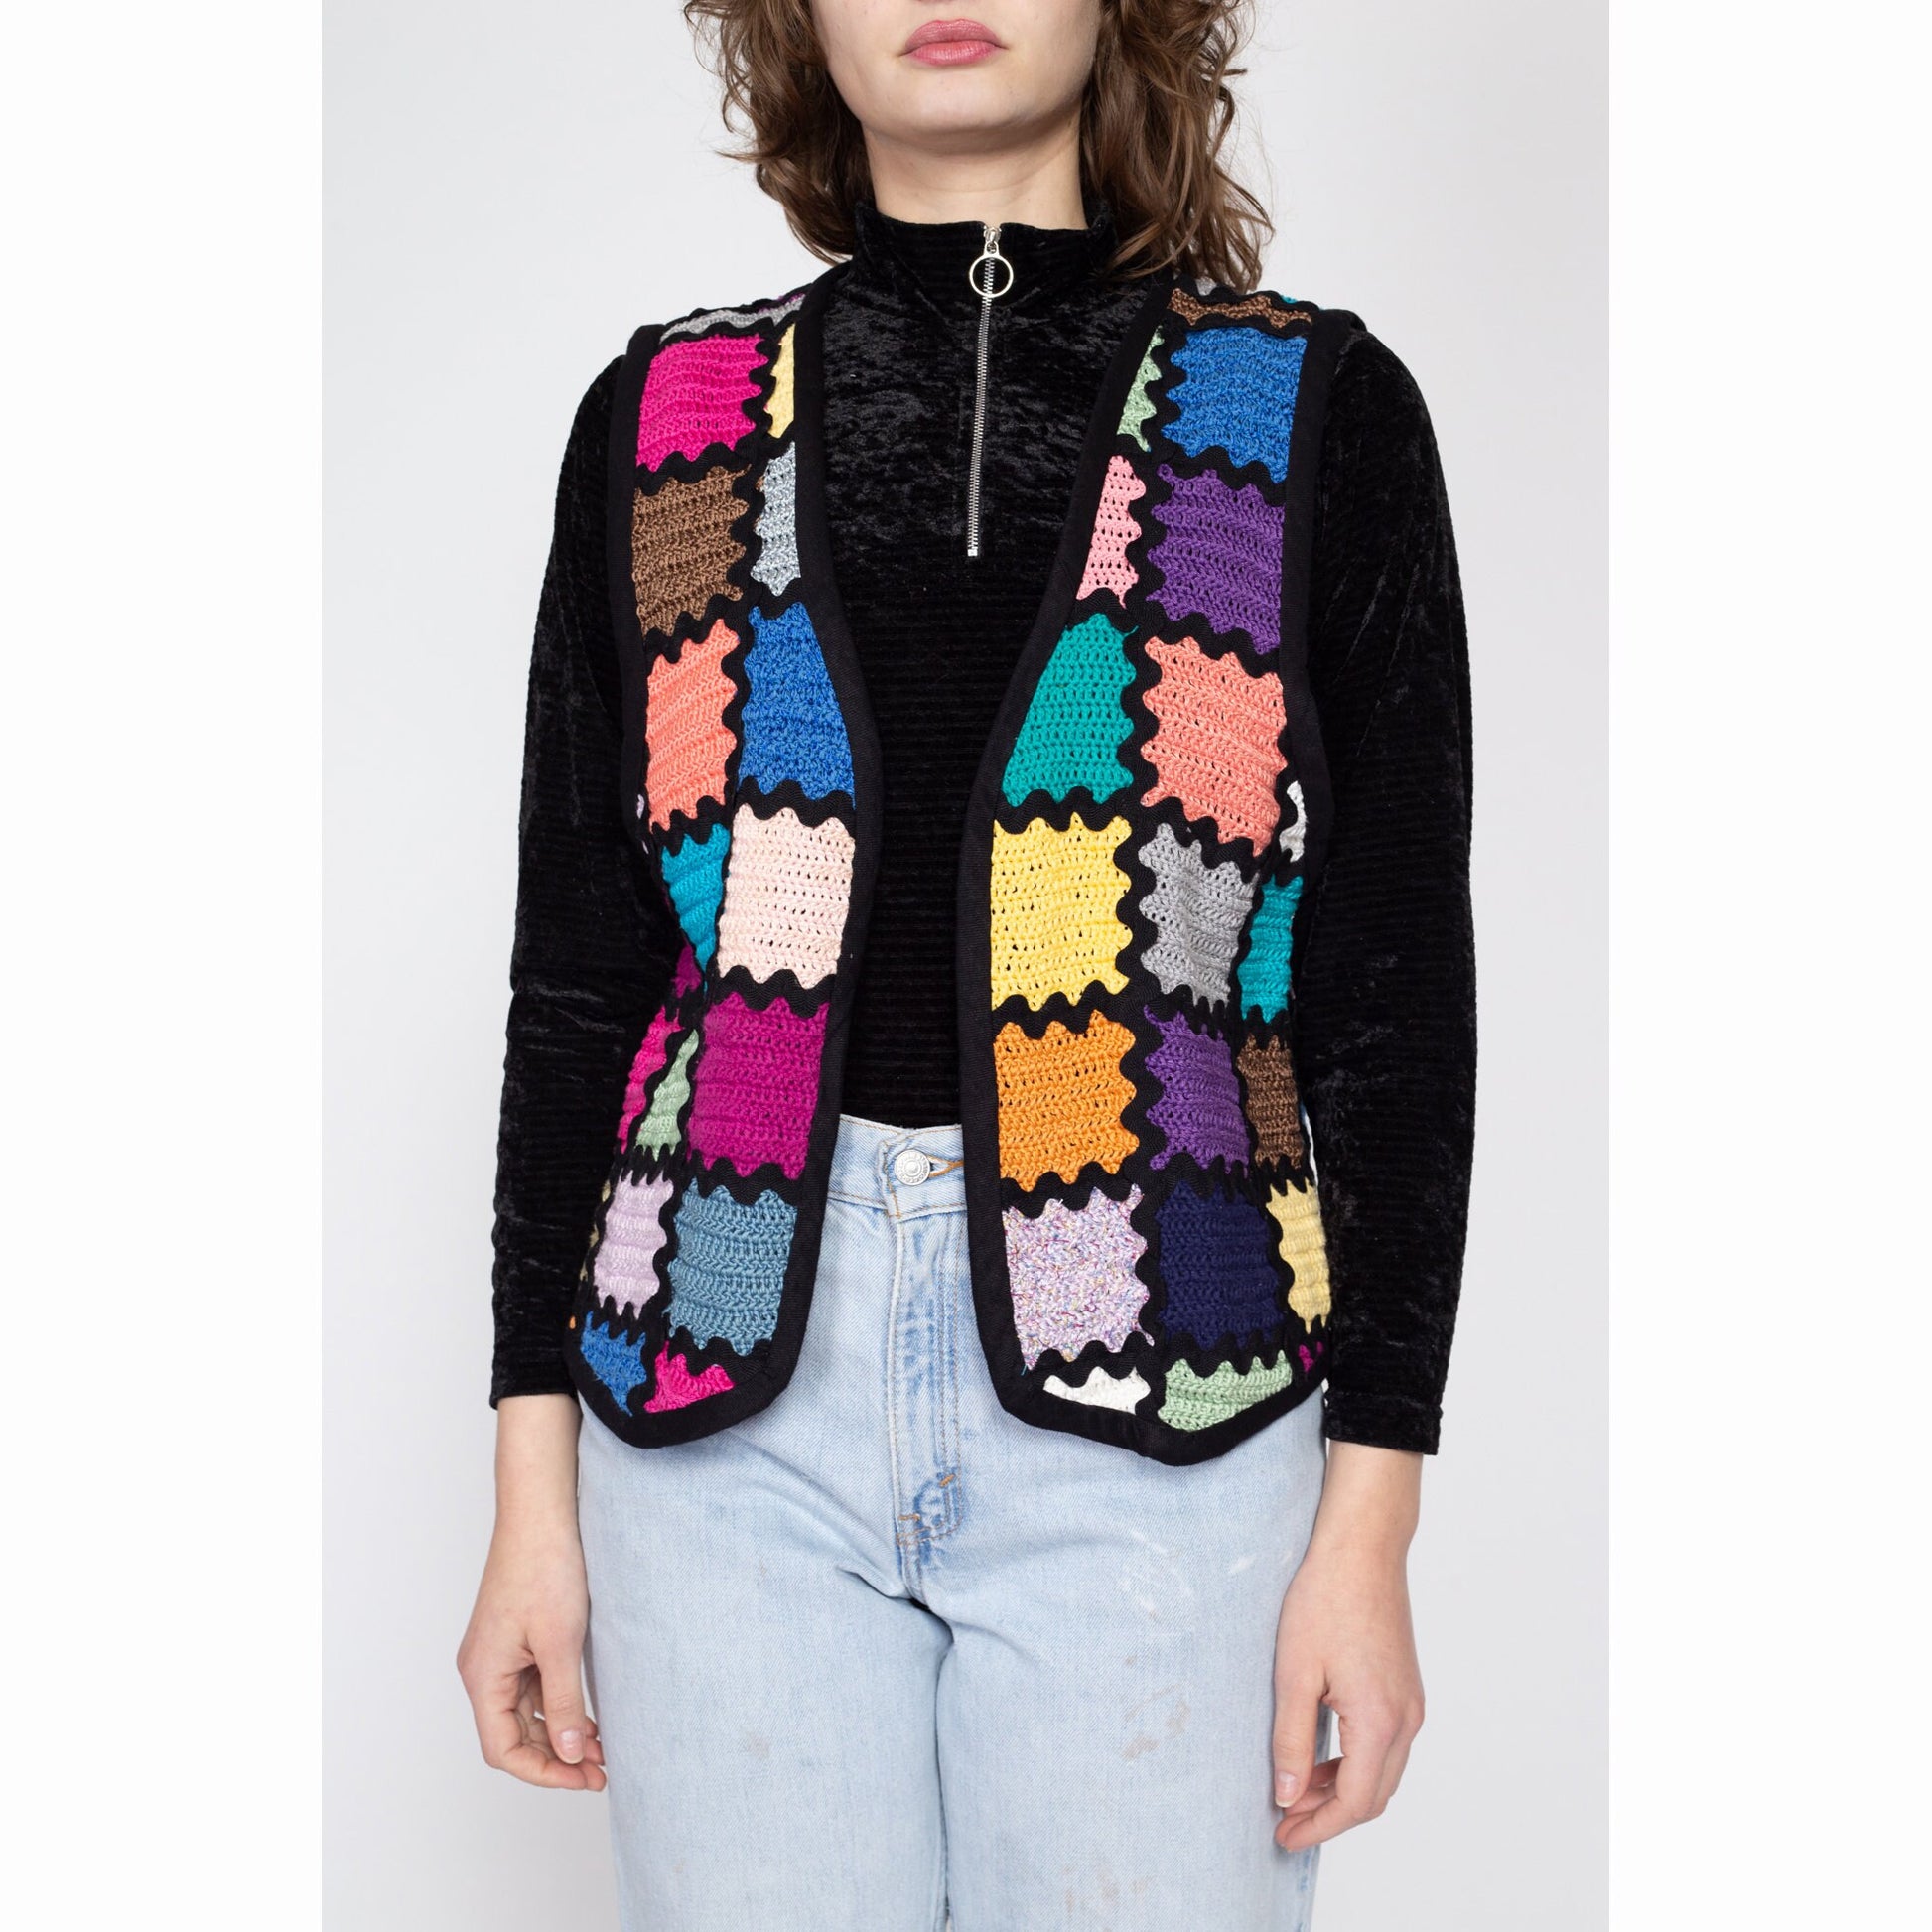 Large 80s Colorful Reversible Patchwork Knit Vest | Vintage Granny Square Boho Open Fit Sleeveless Top